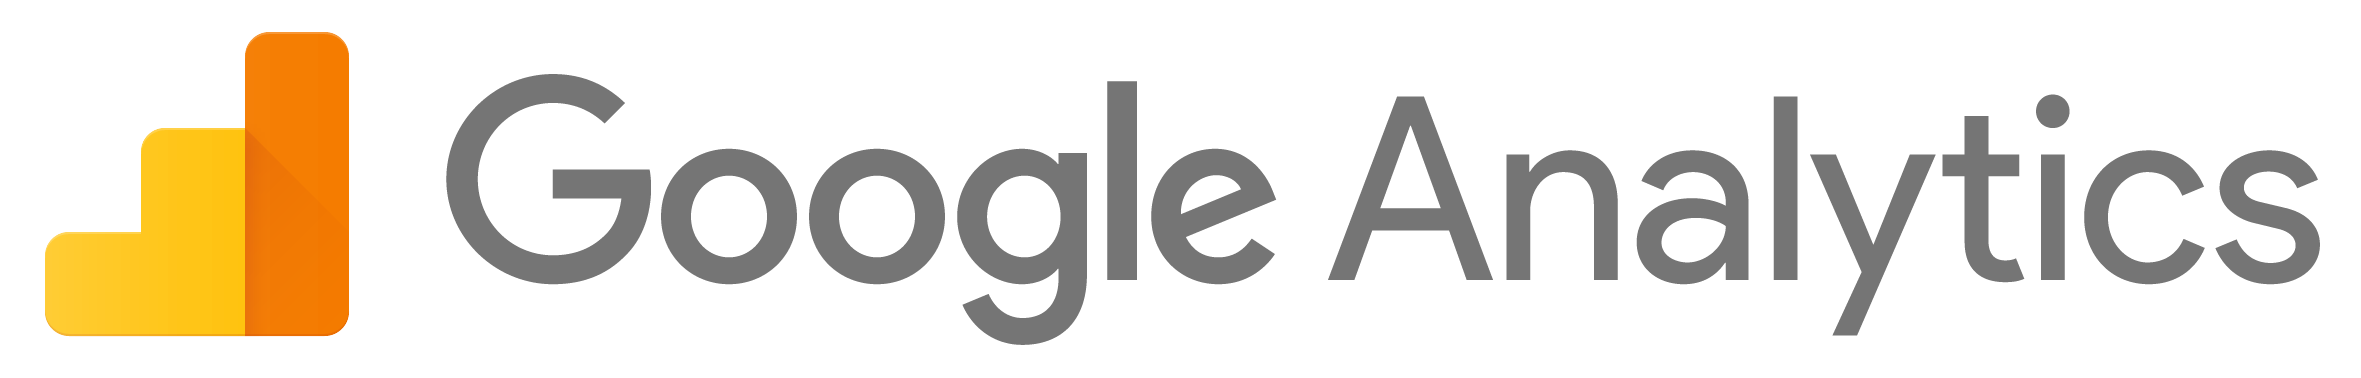 image of the google analytics logo